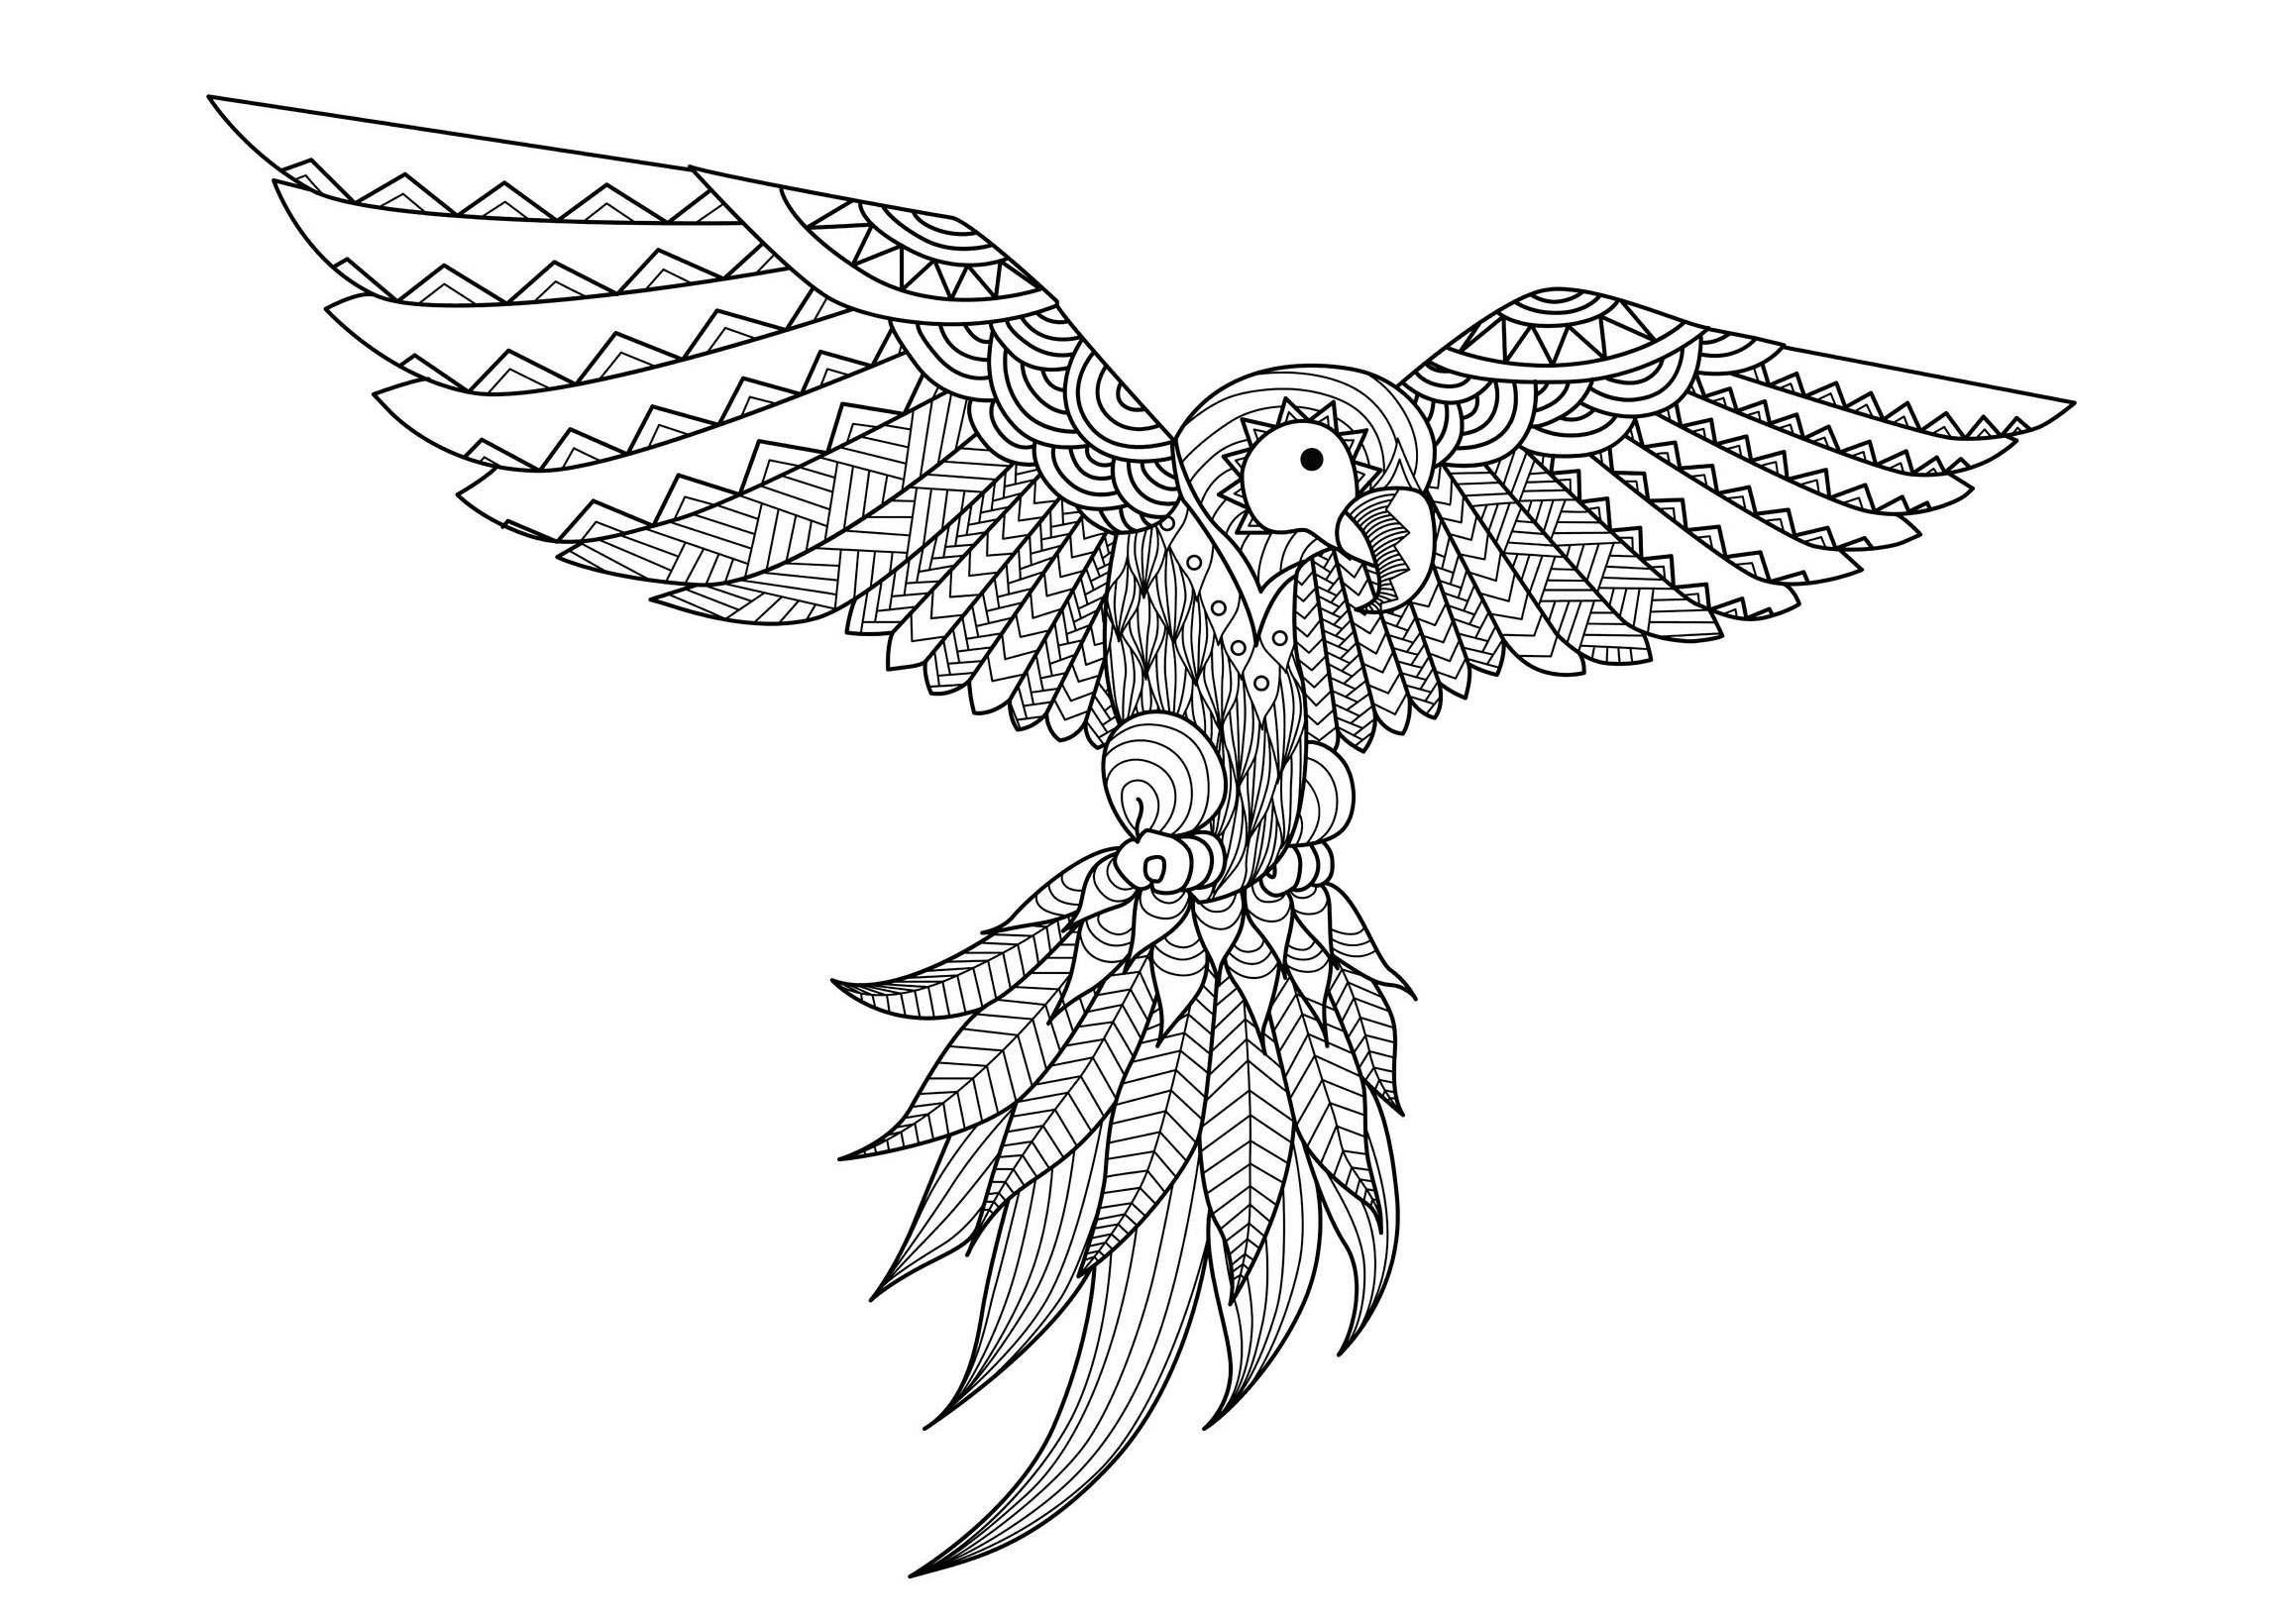 Superbe dessin de perroquet Zentangle, à colorier, par Bimdeedee (source : 123rf)